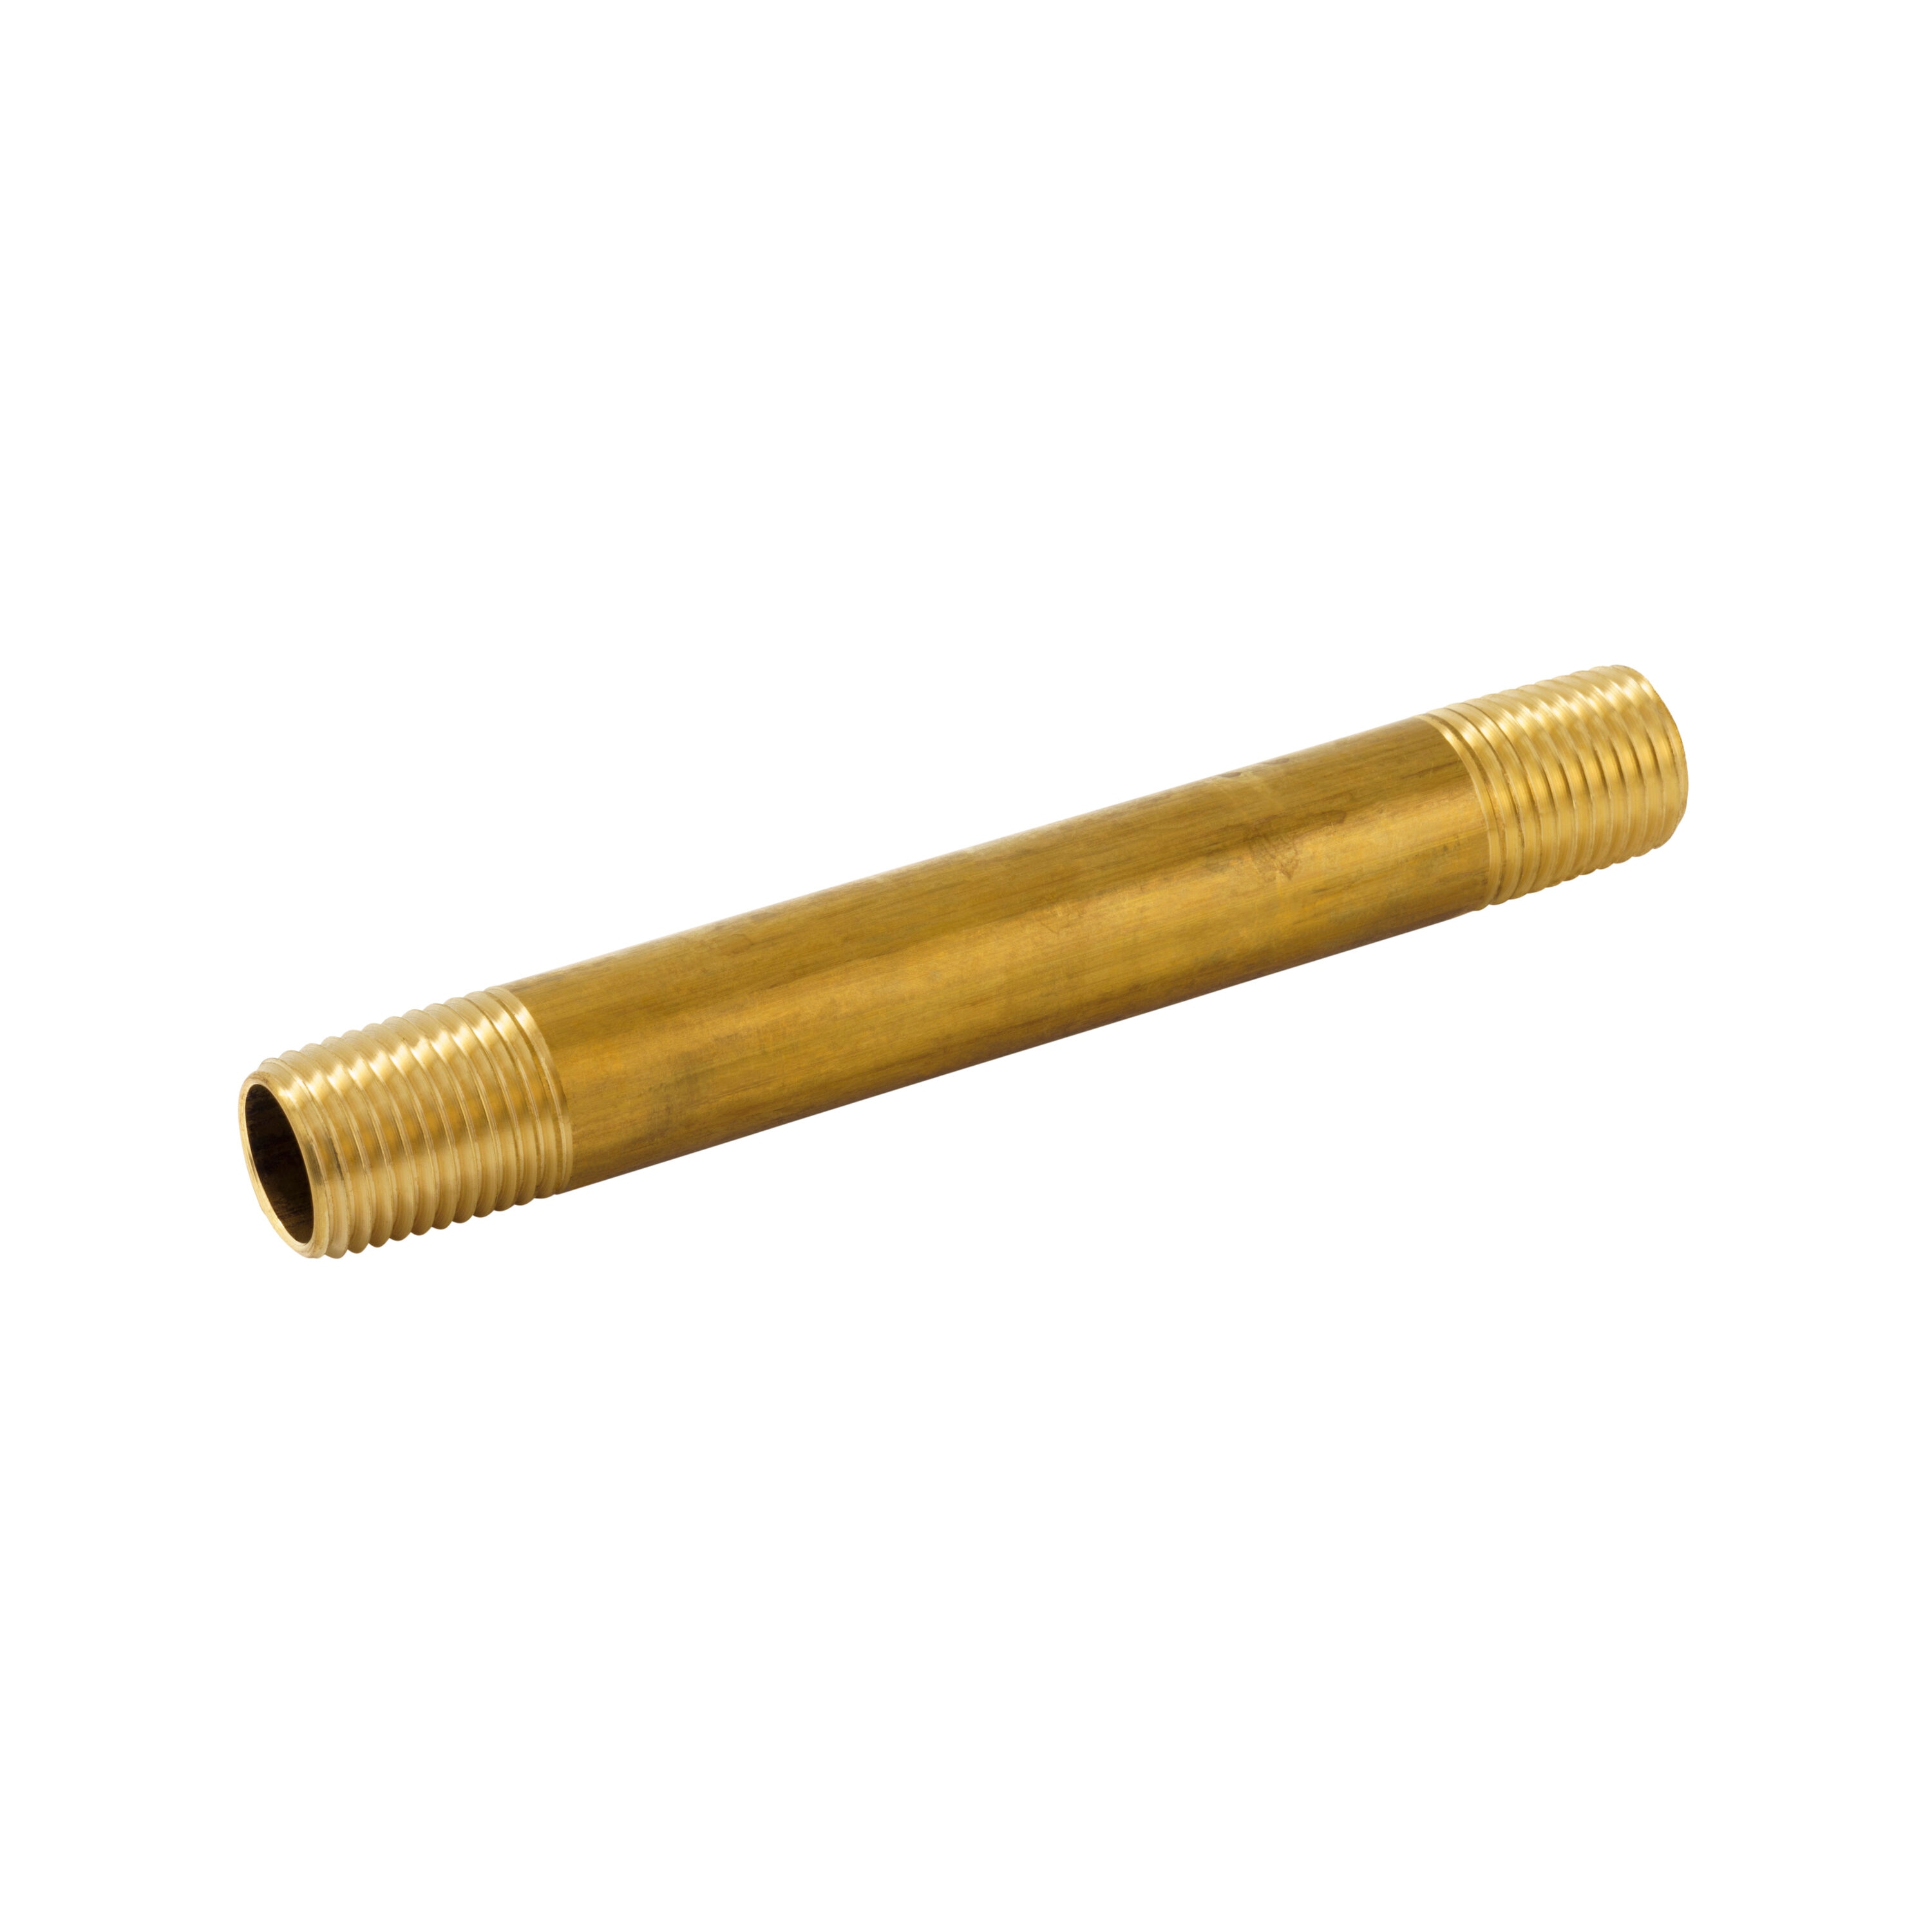 U.S. Solid Brass Hex Nipple - 1/4 x 1/4 NPT Male Pipe Fitting Adapter, 3/